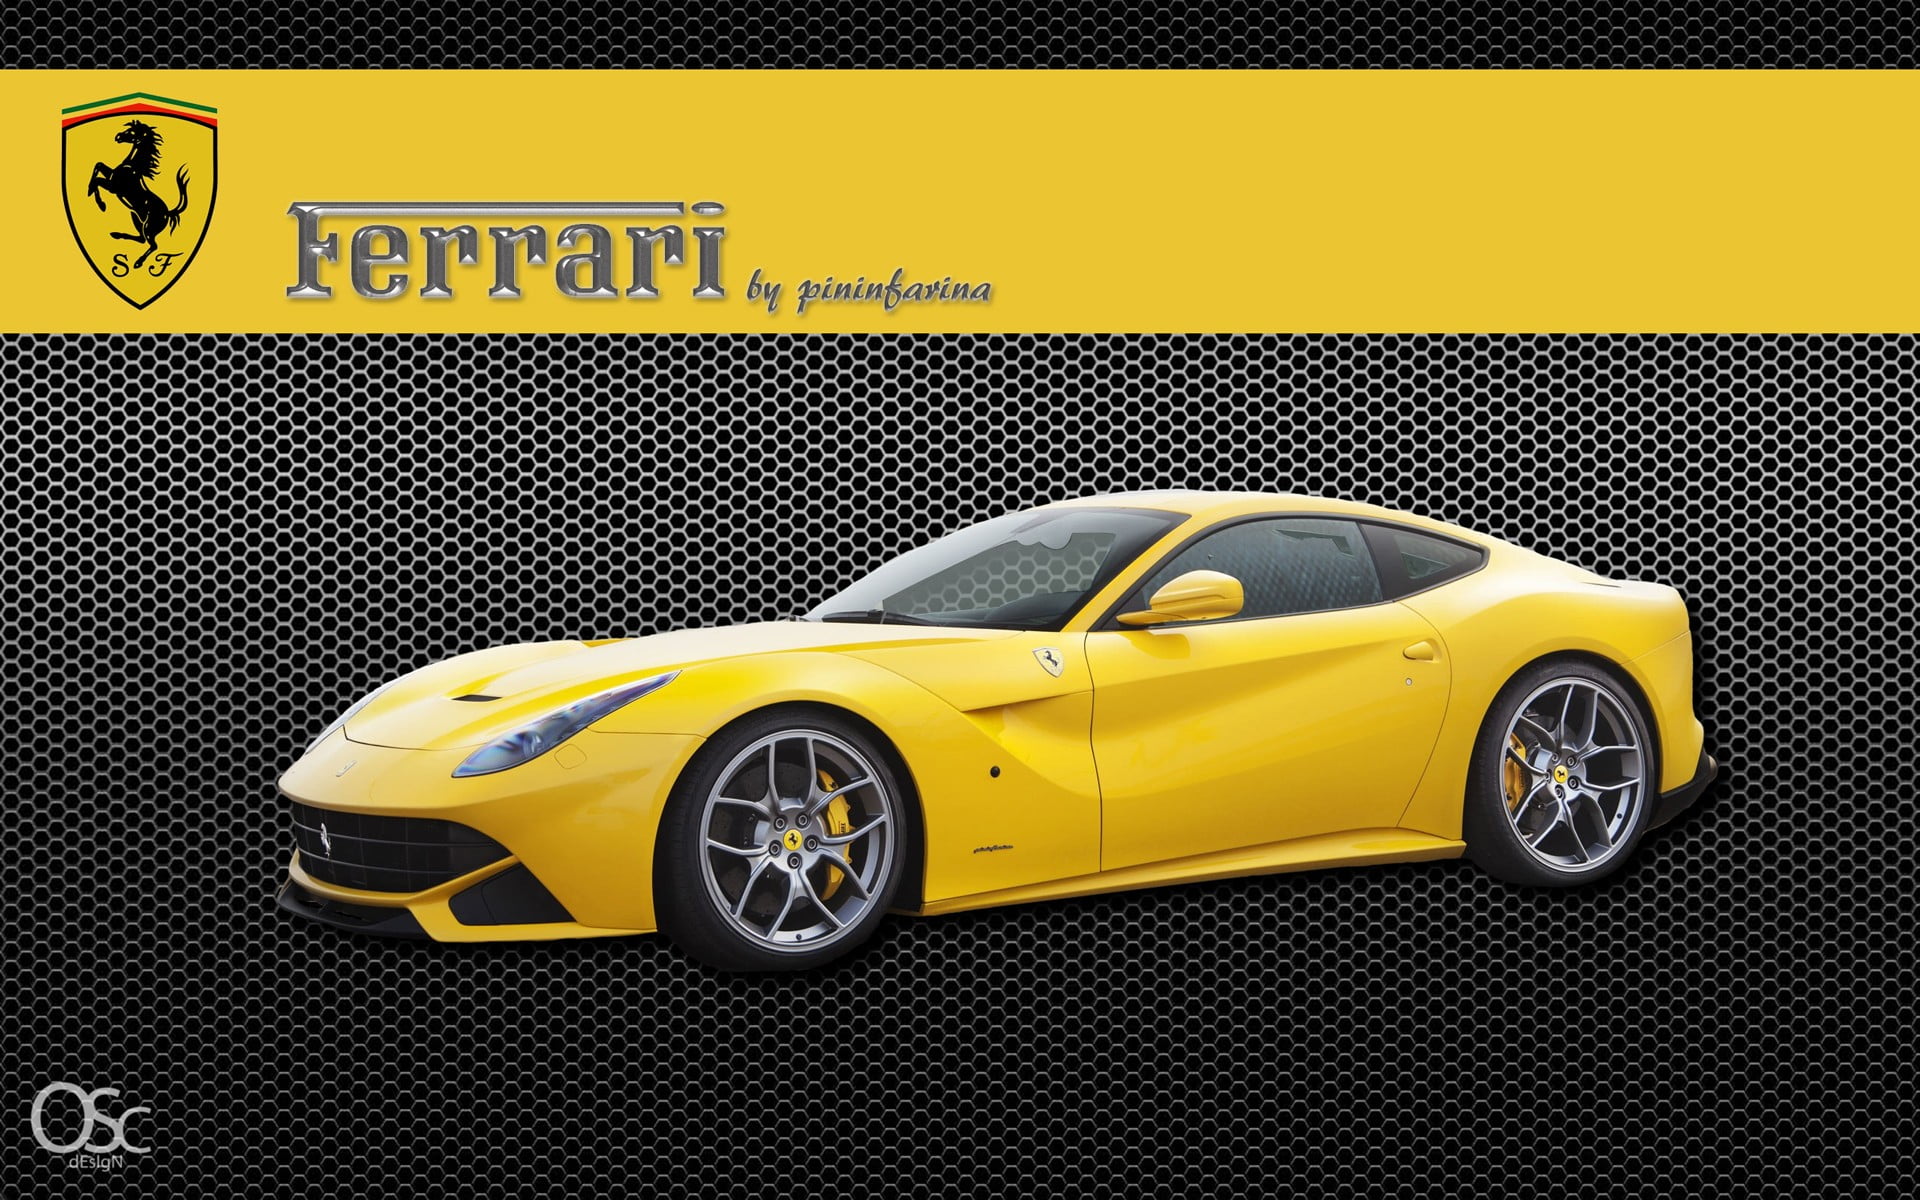 yellow and black car die-cast model, Ferrari, yellow cars, digital art, vehicle